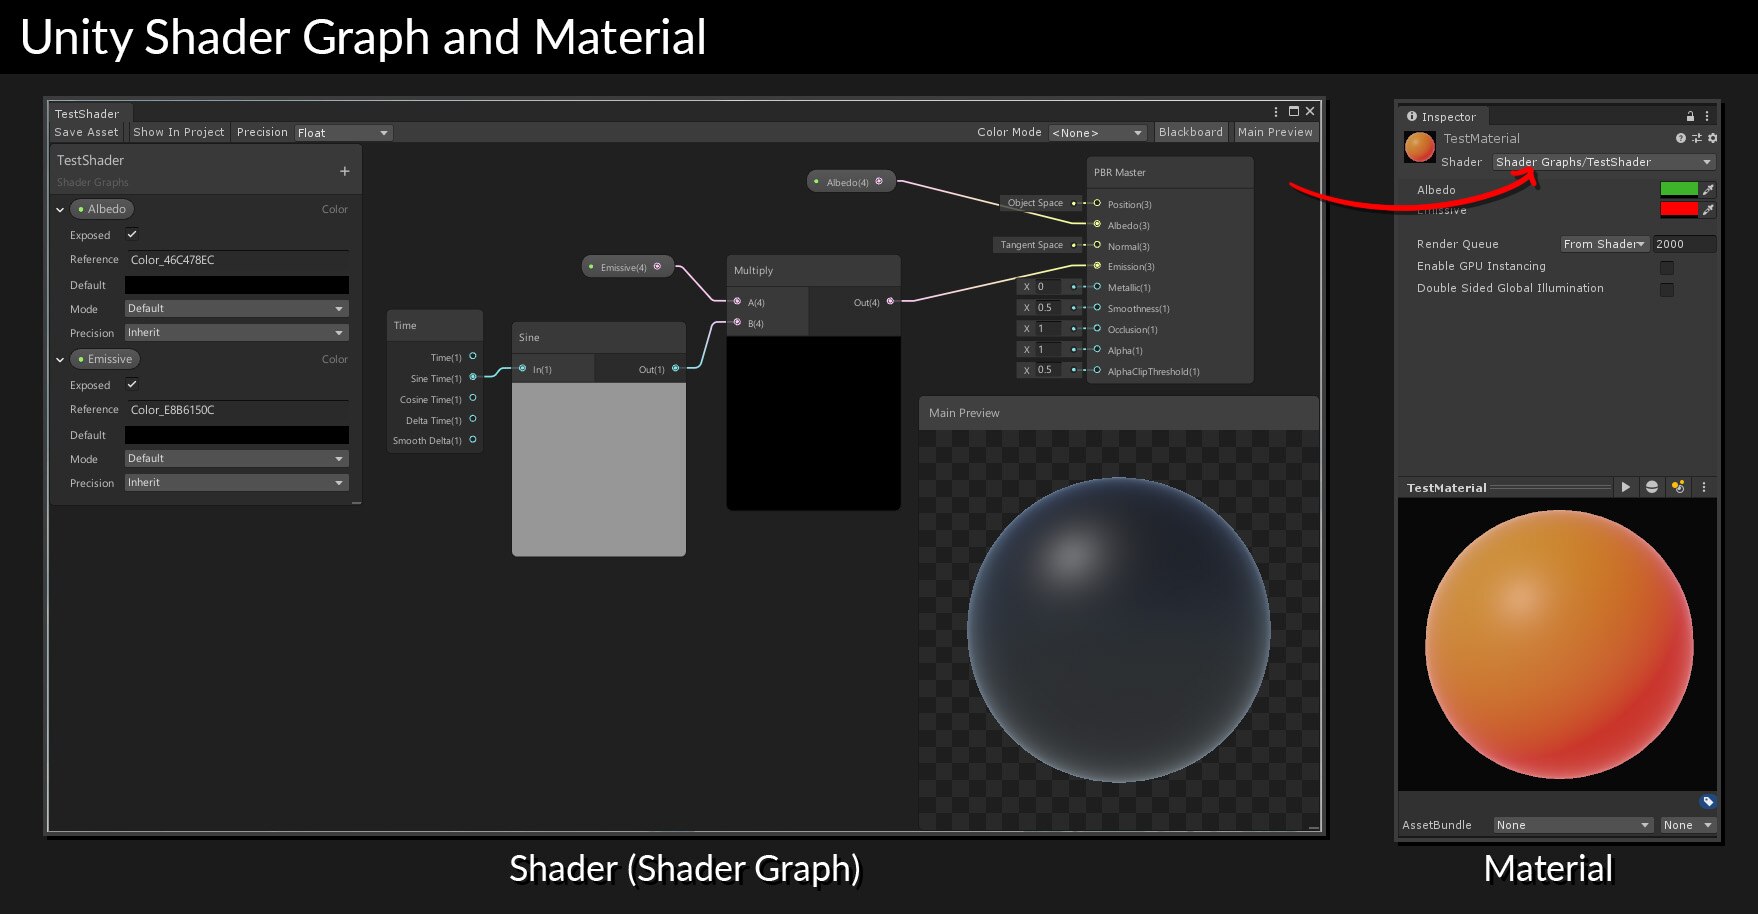 shader rendering 3.0 download windows 10